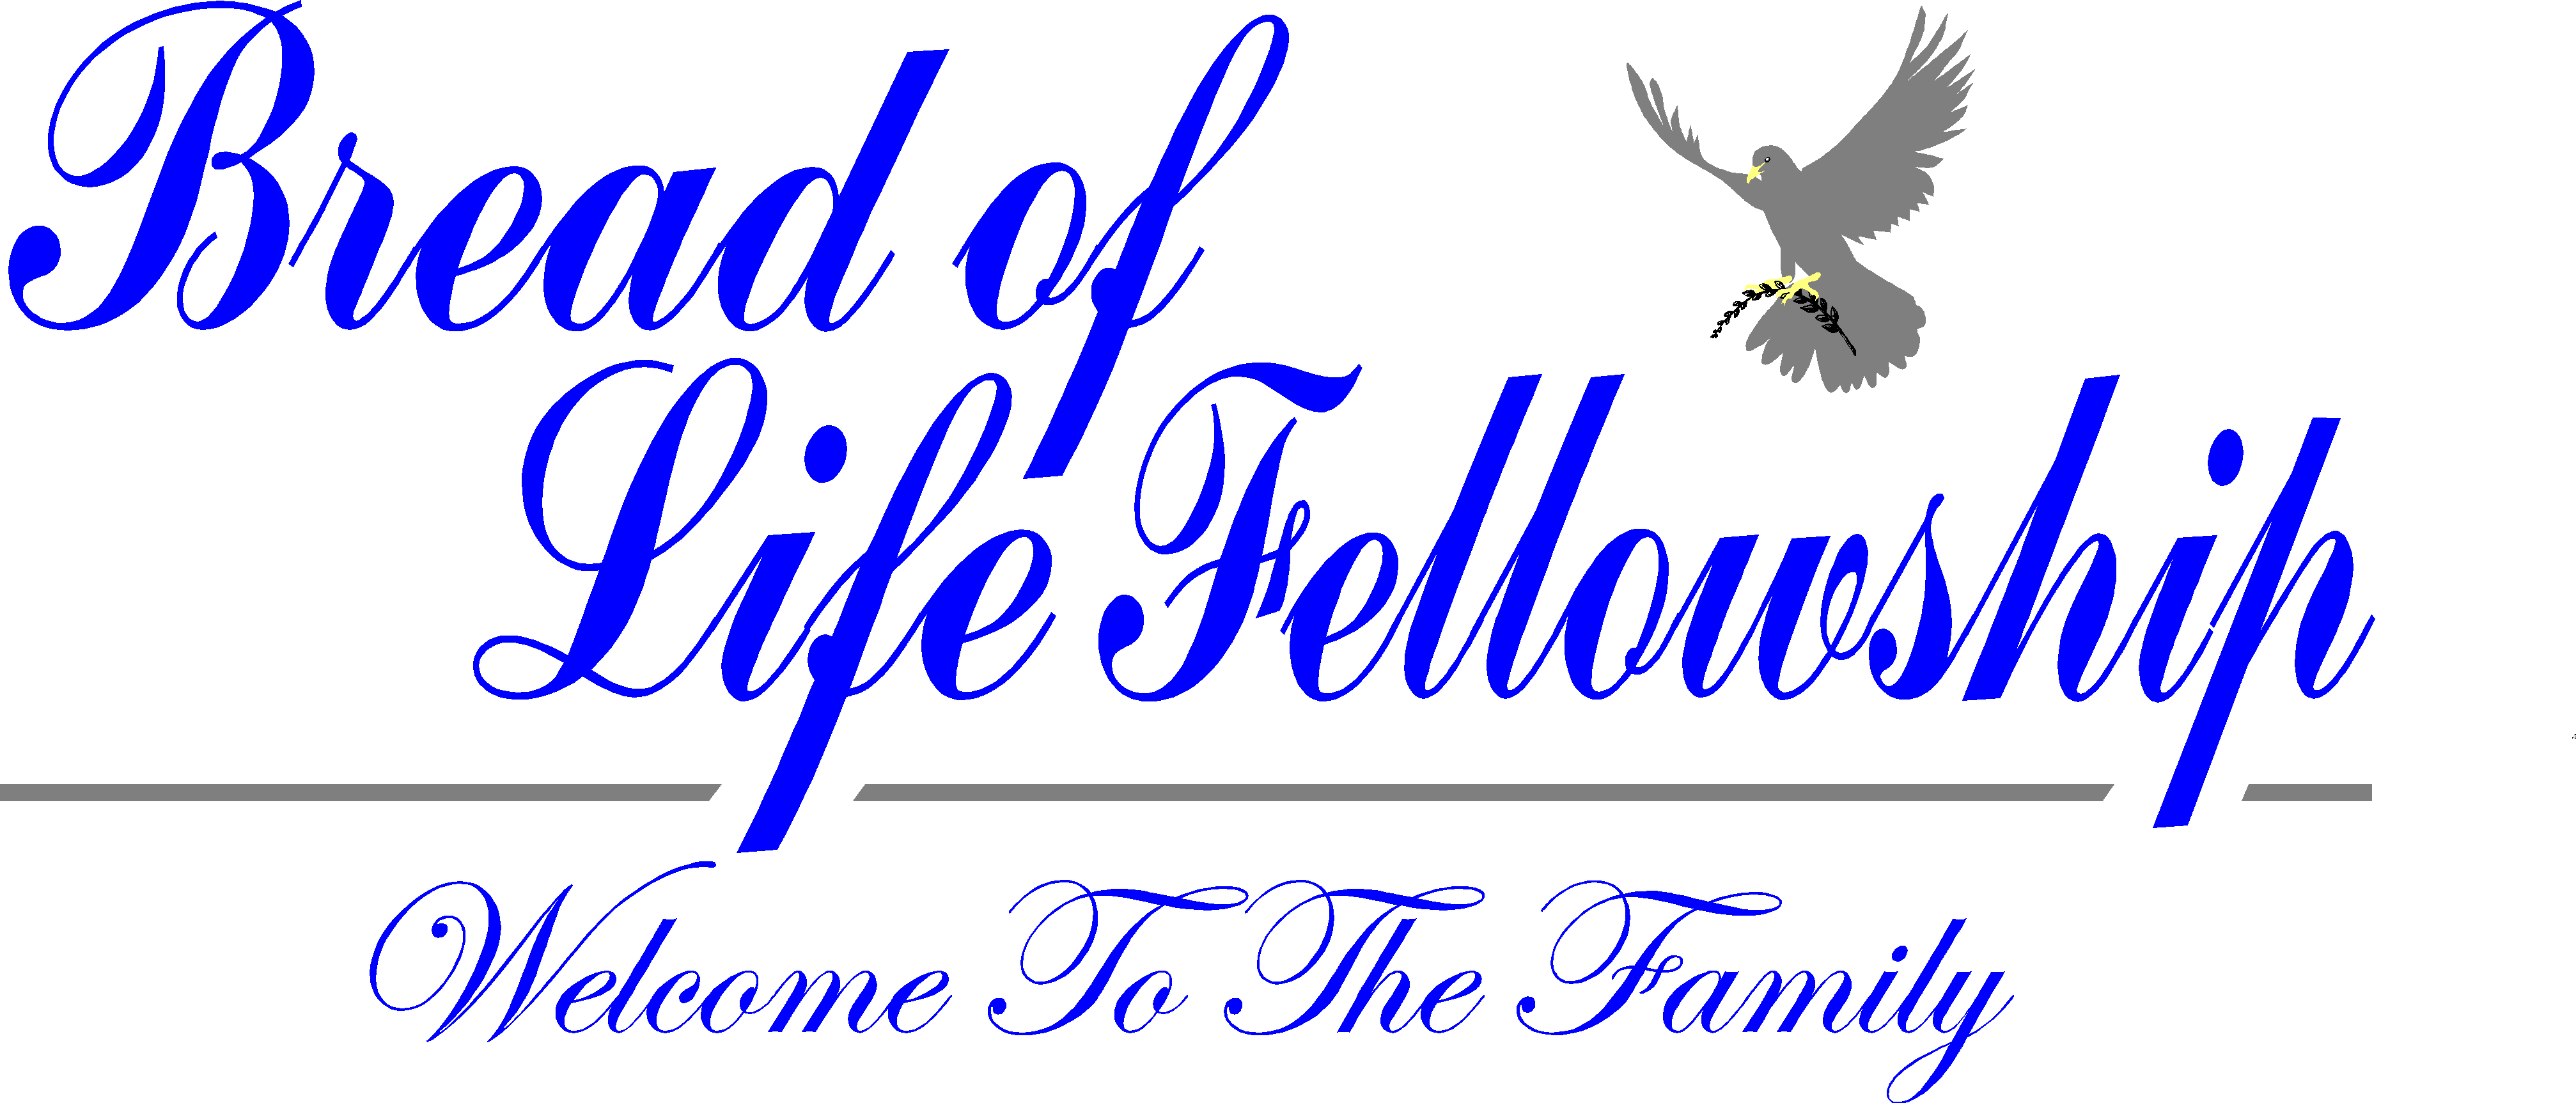 Bread of Life Fellowship